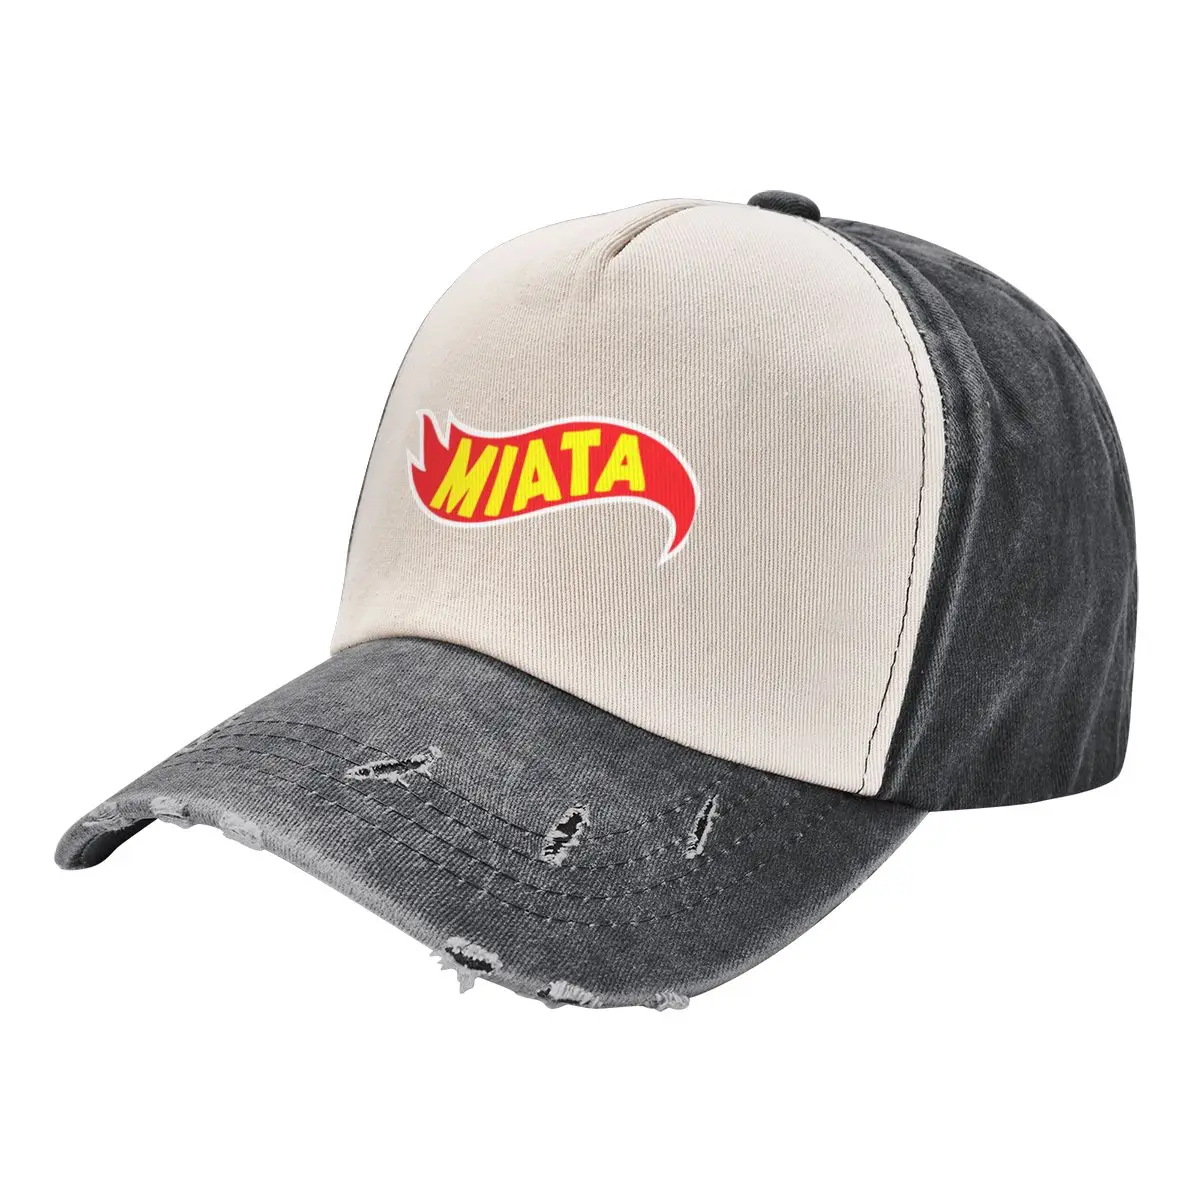 

Miata - JDMWheels бейсболка, пляжная сумка, Кепка на заказ, роскошная мужская шляпа, летняя мужская шляпа